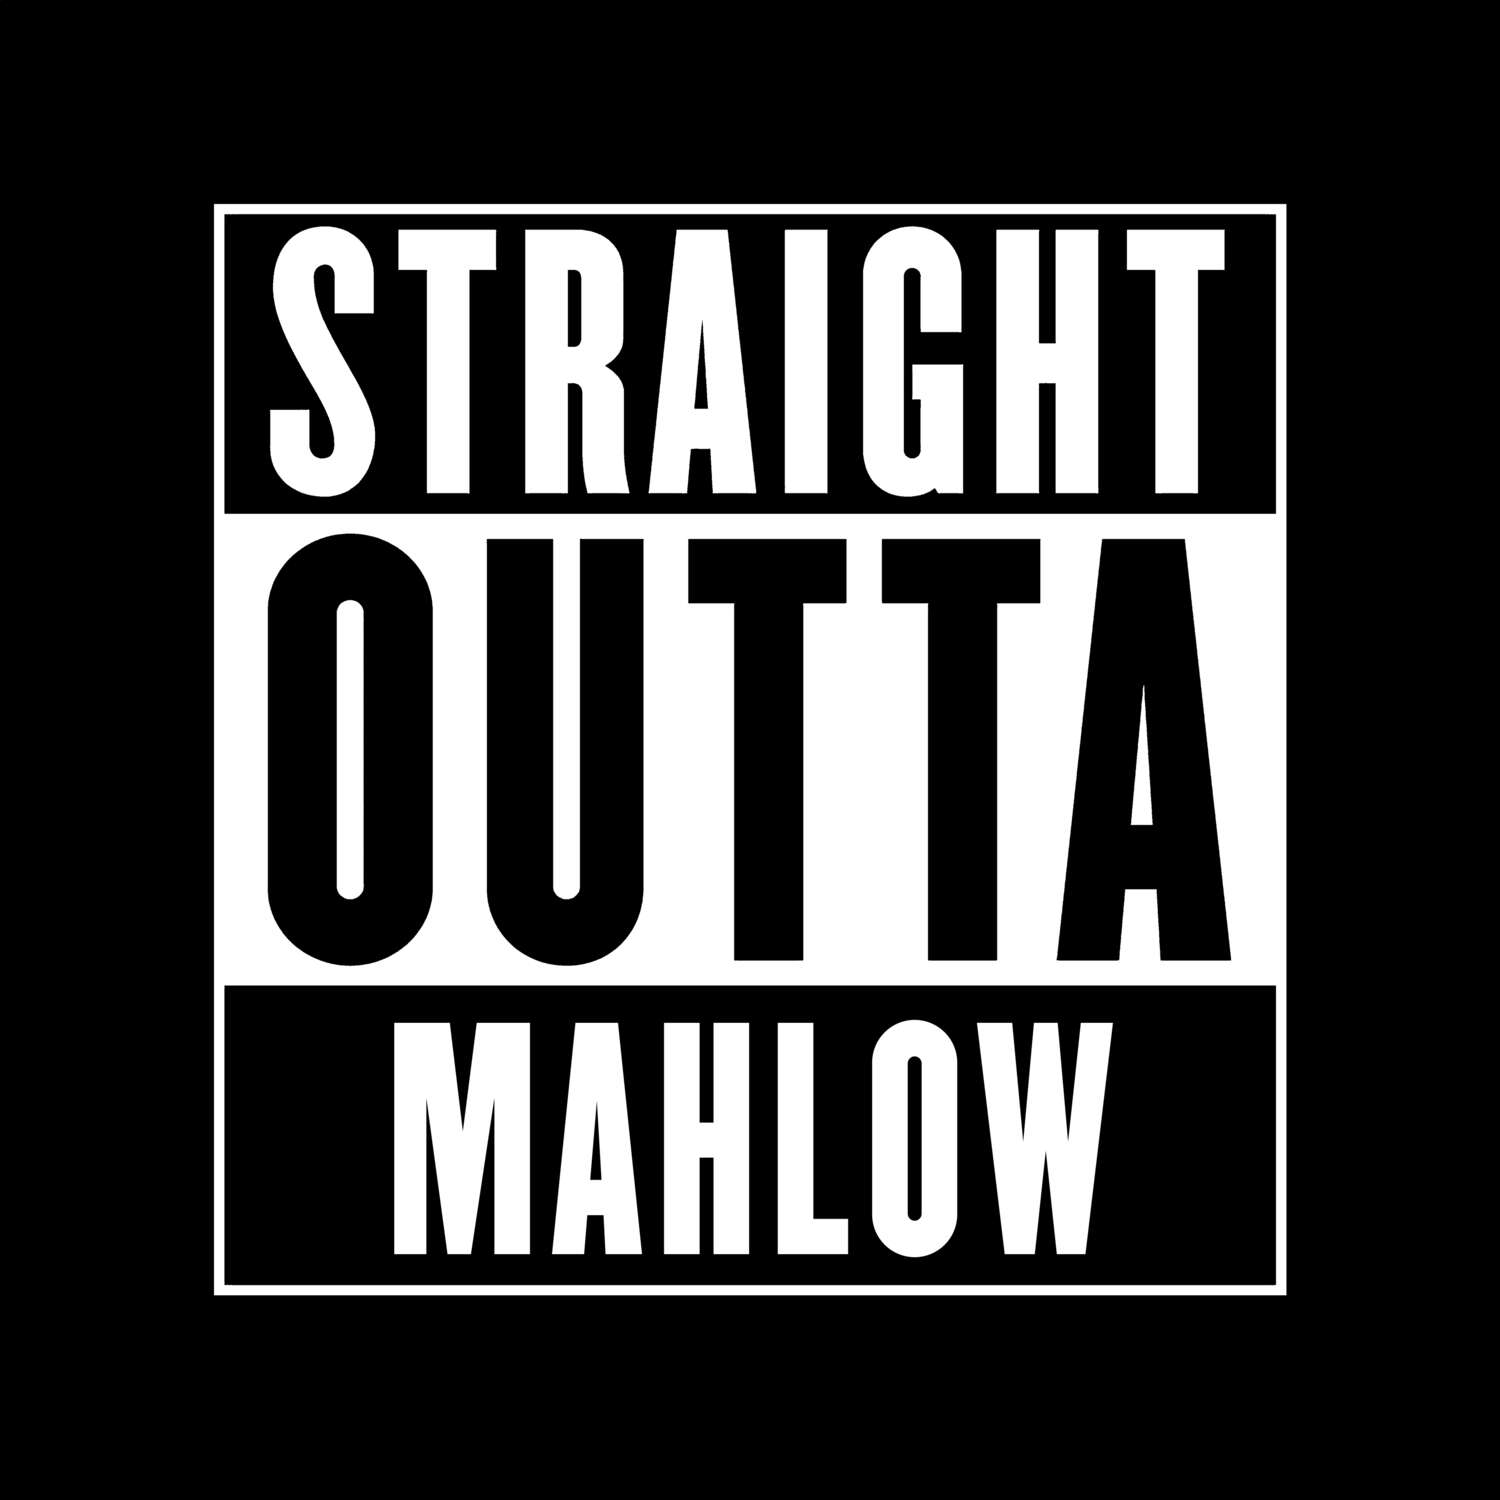 Mahlow T-Shirt »Straight Outta«